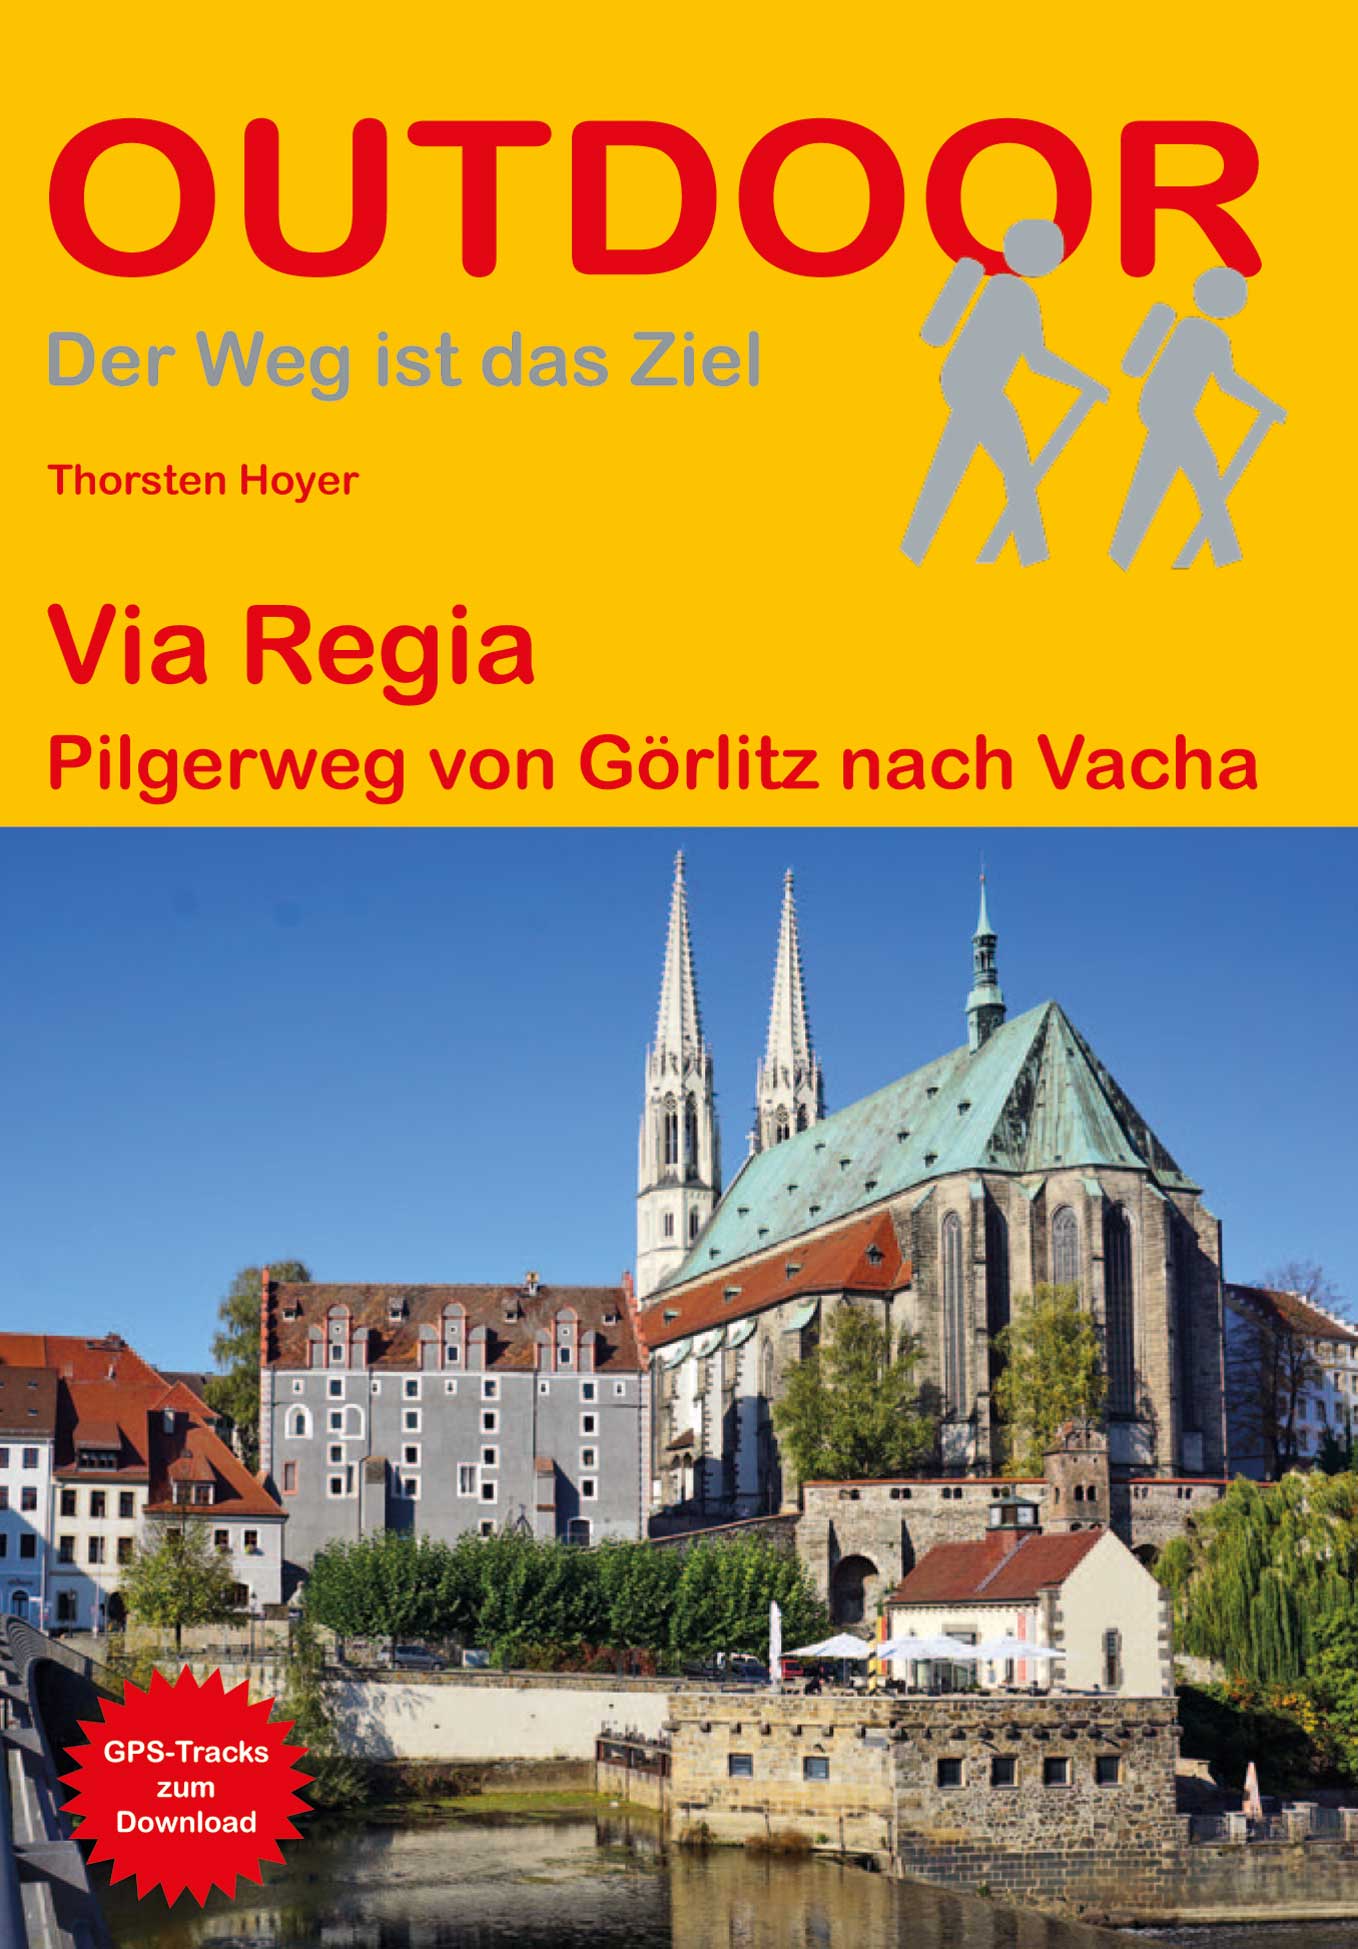 Online bestellen: Wandelgids - Pelgrimsroute Via Regia | Conrad Stein Verlag